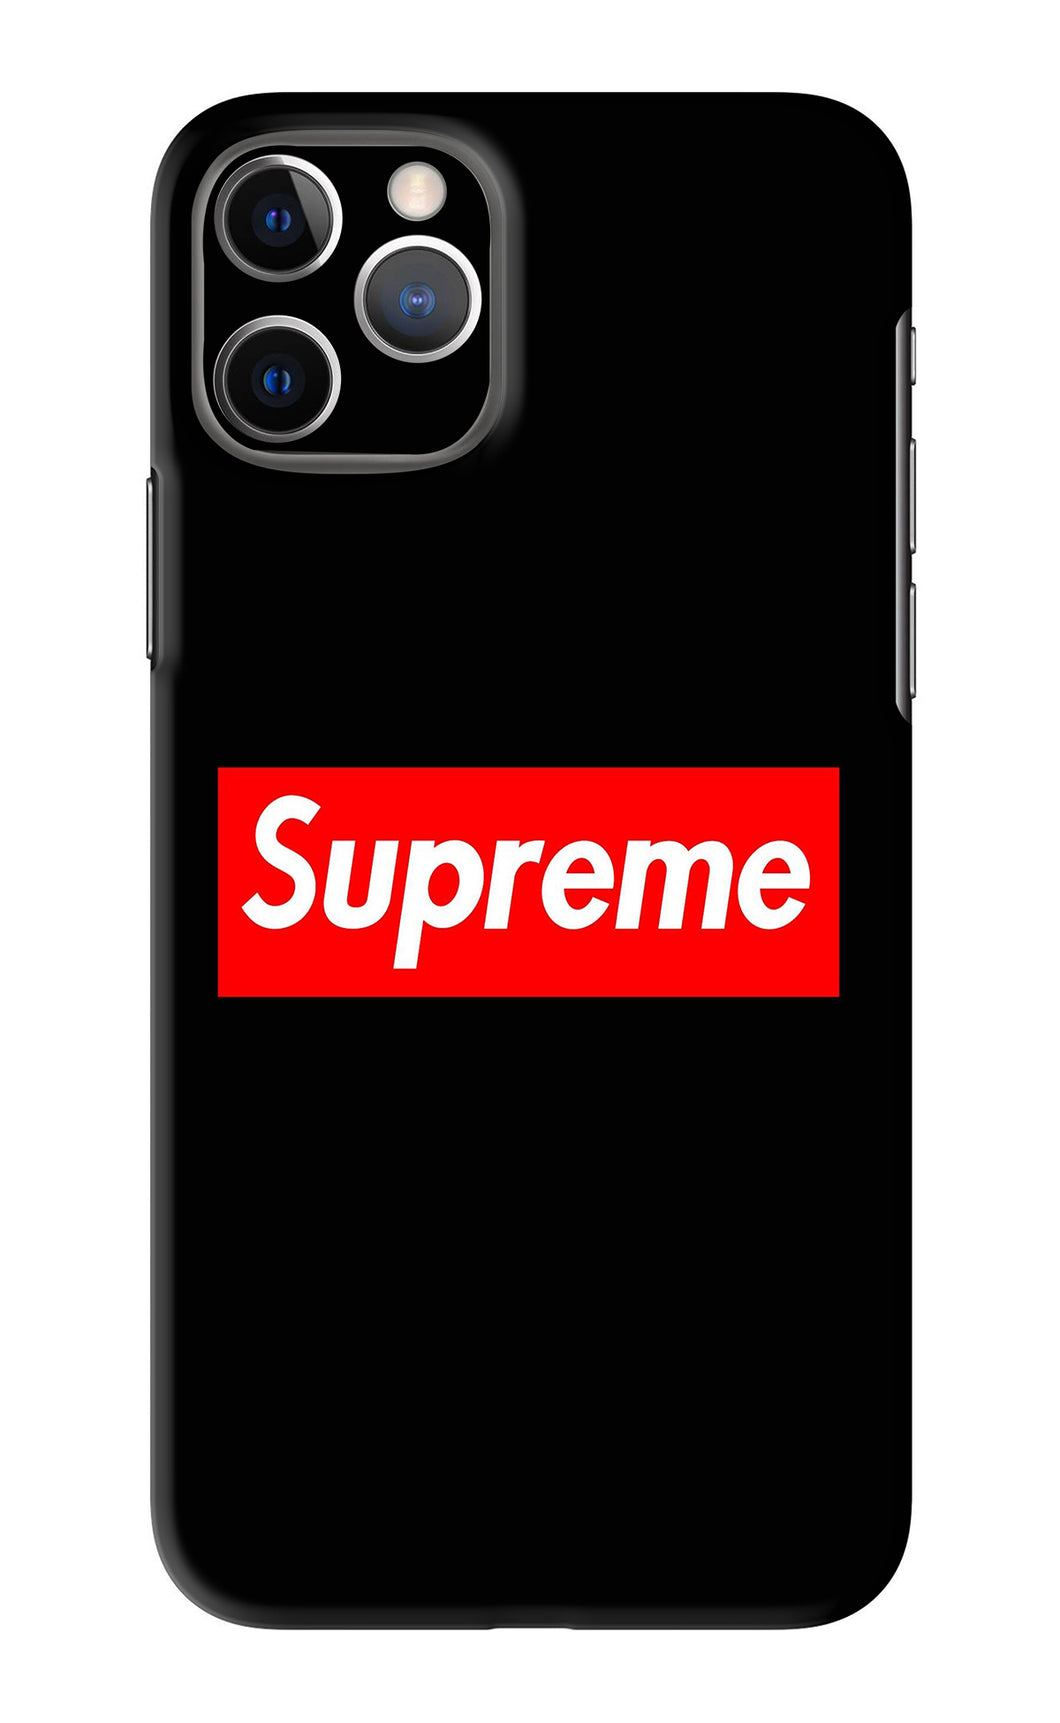 Supreme iPhone 11 Pro Max Back Skin Wrap